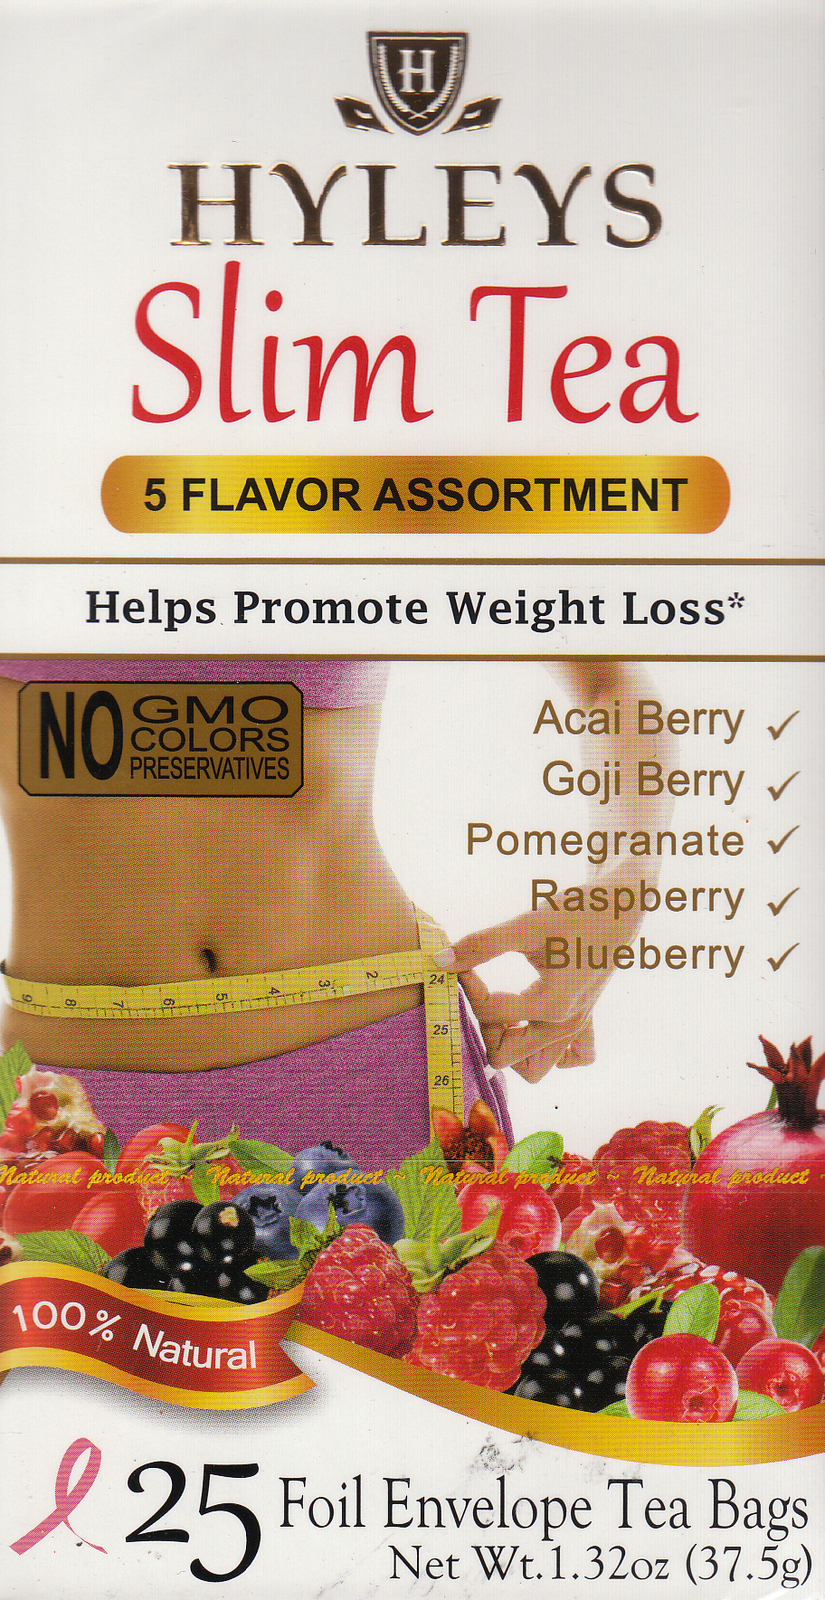 Hyleys Slim Tea 5 Flavor Assortment - Weight Loss Herbal Supplement - 25 Tea Bag - $13.95